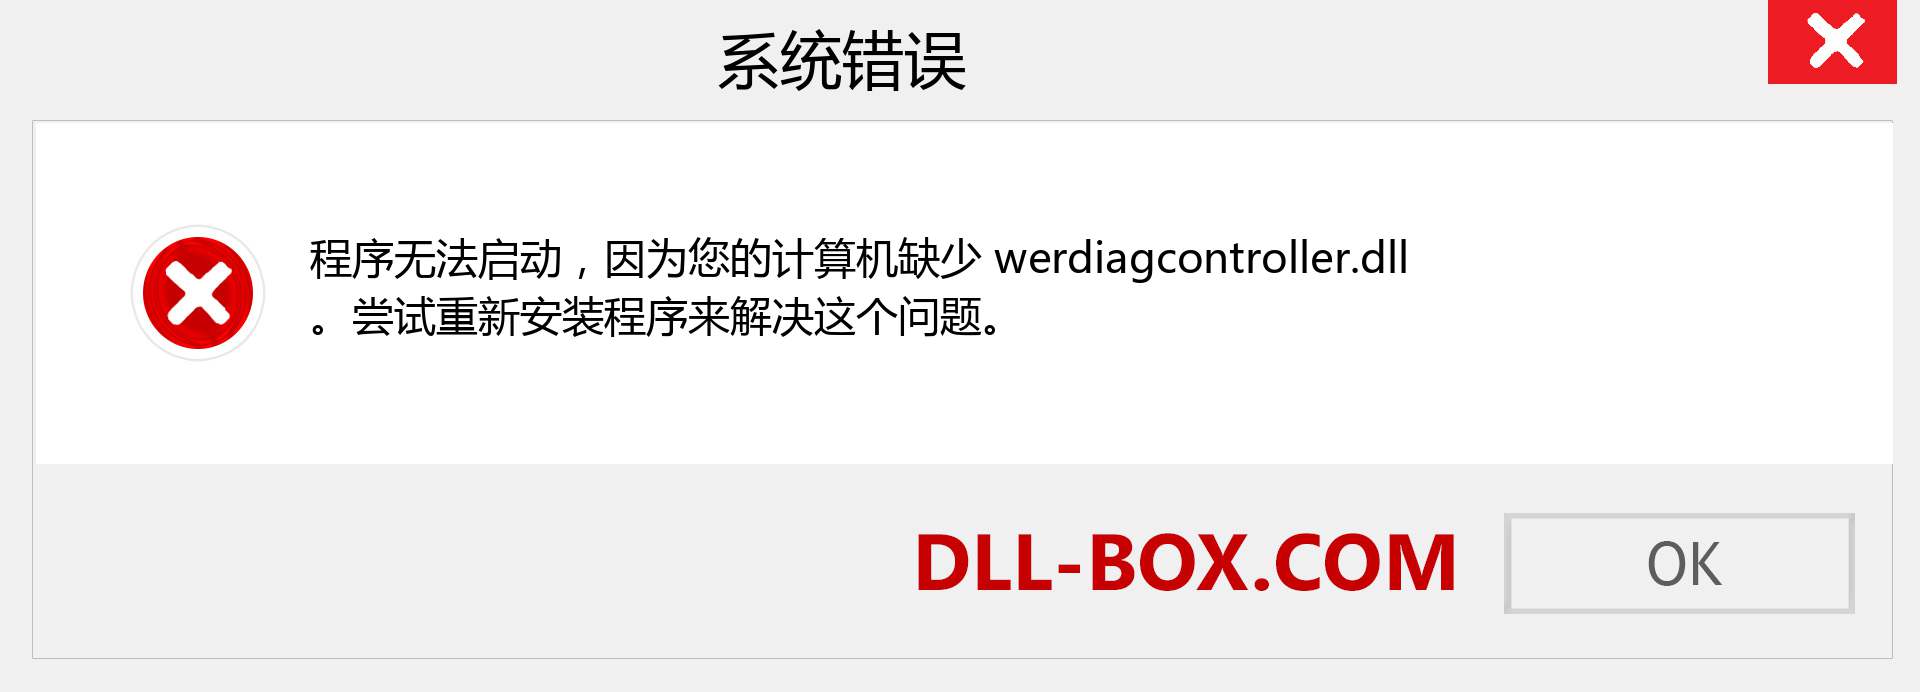 werdiagcontroller.dll 文件丢失？。 适用于 Windows 7、8、10 的下载 - 修复 Windows、照片、图像上的 werdiagcontroller dll 丢失错误